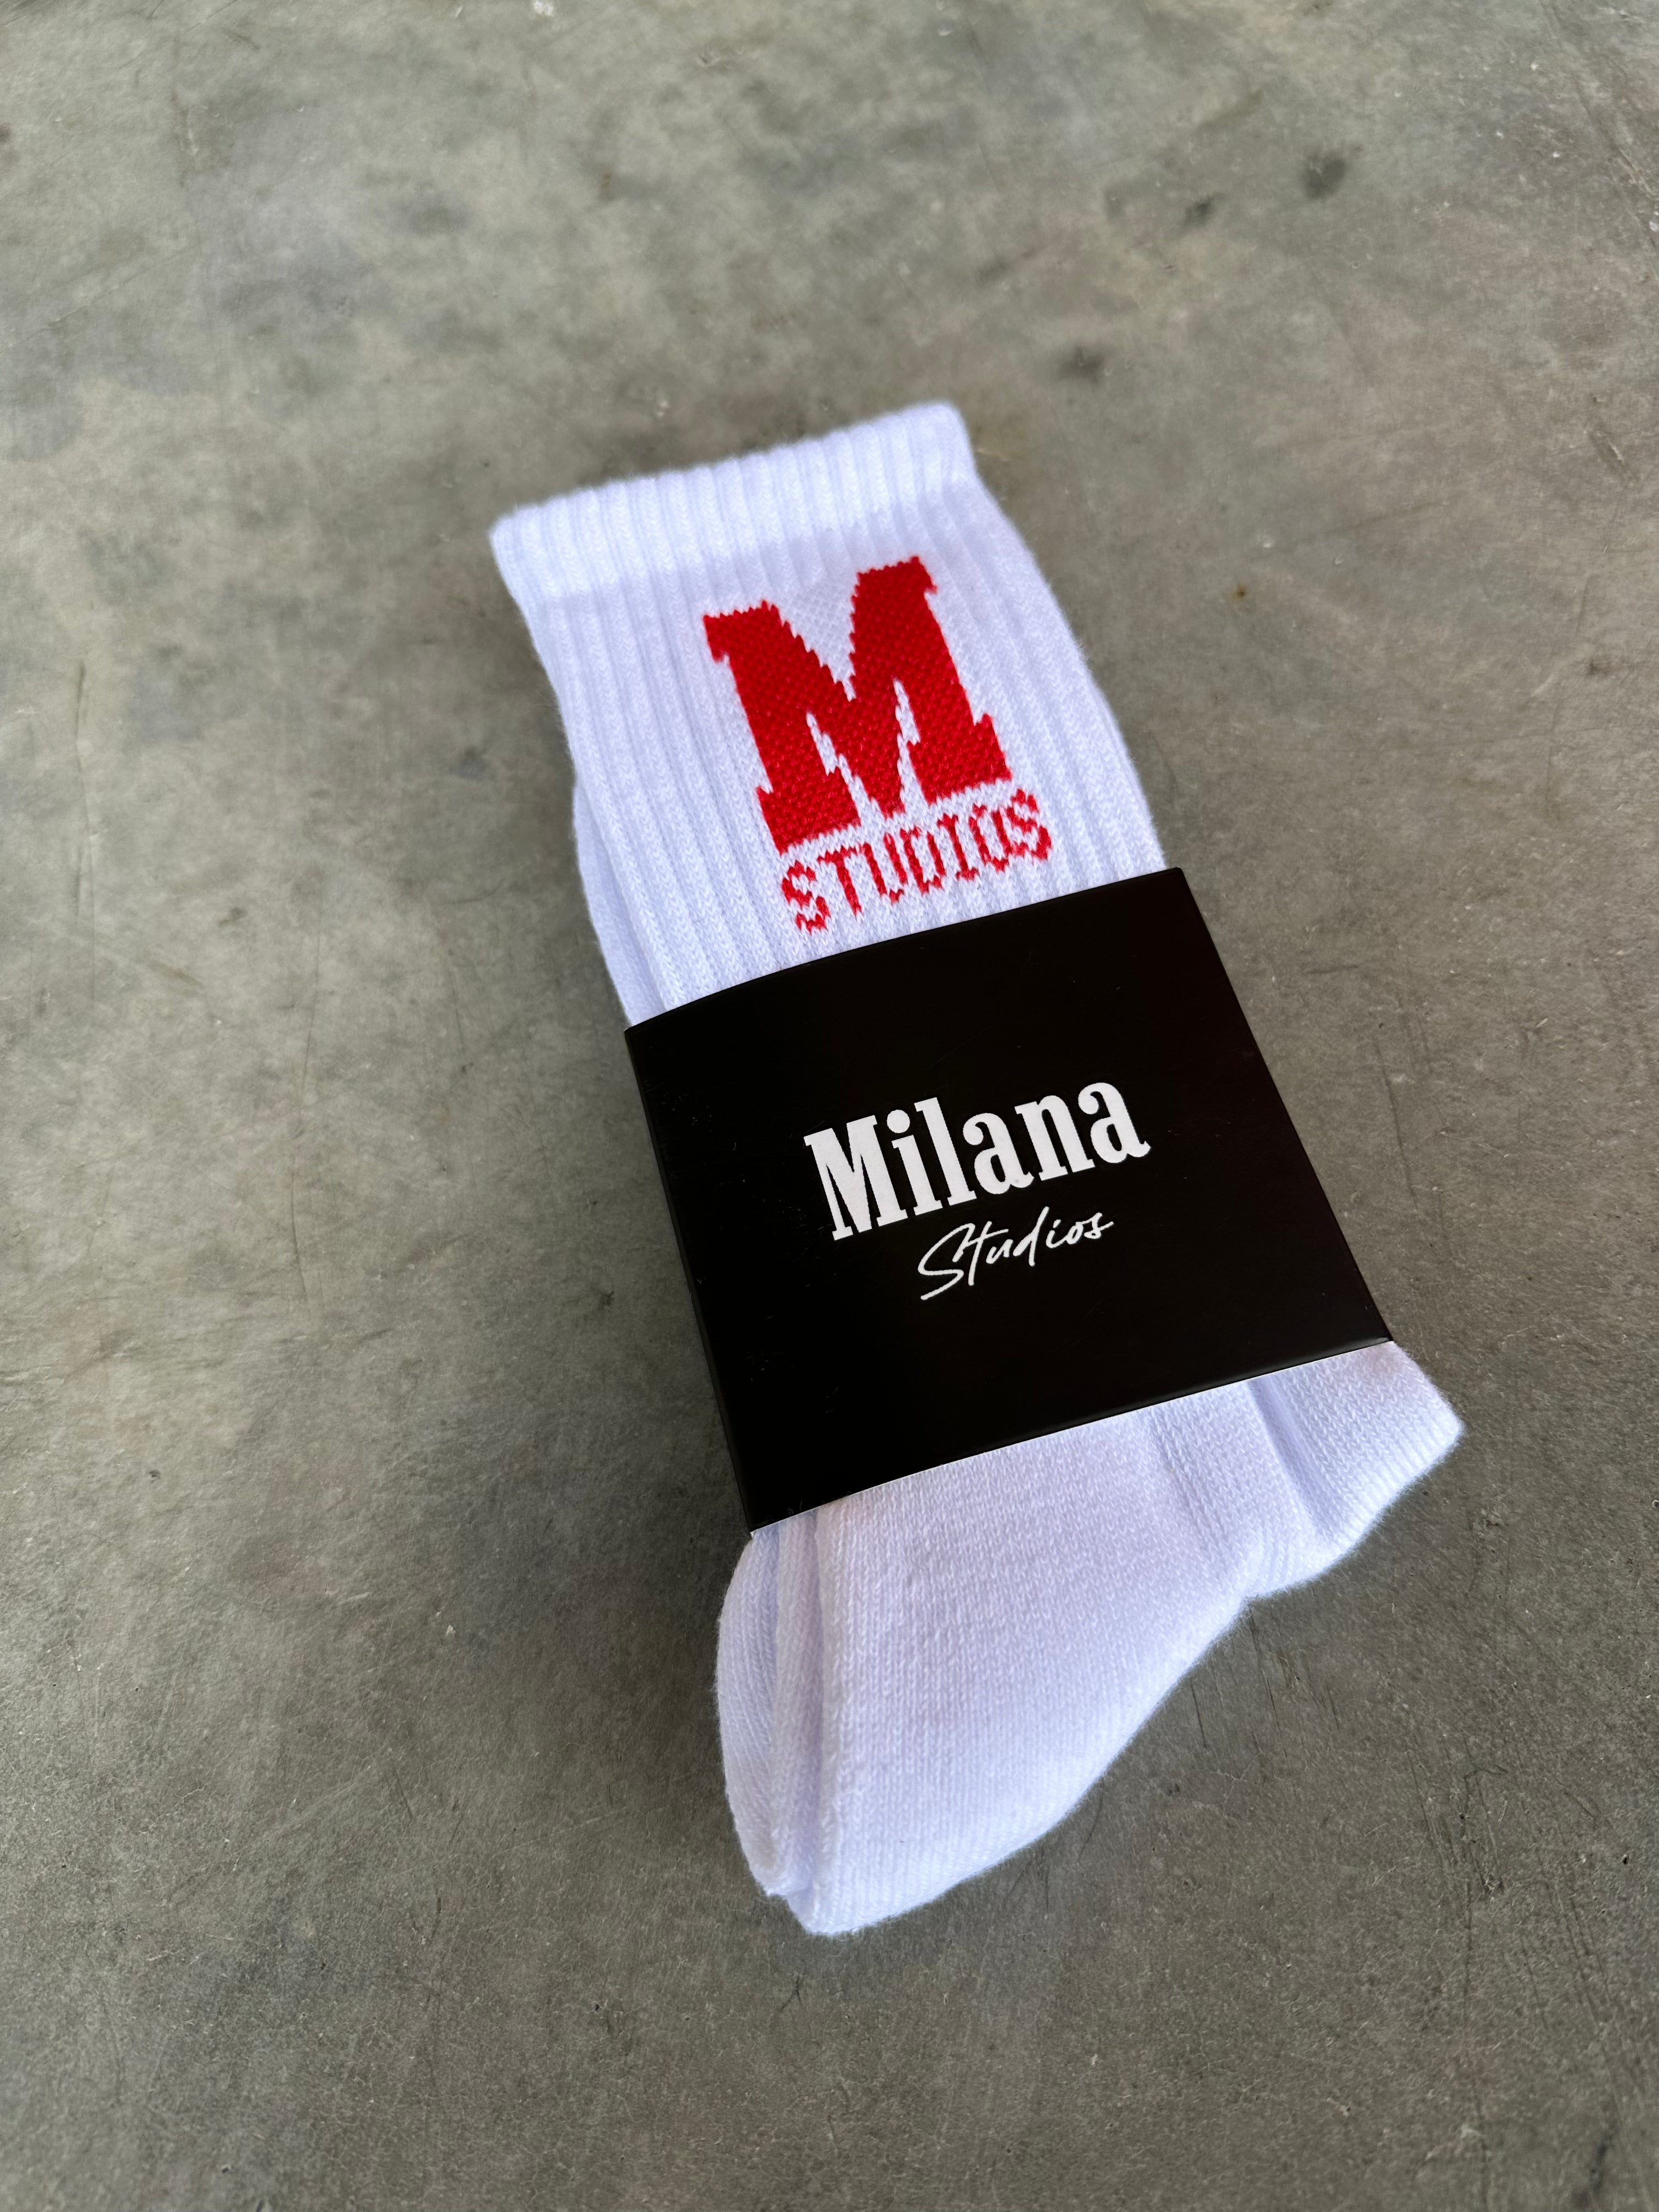 White M Studios Socks.